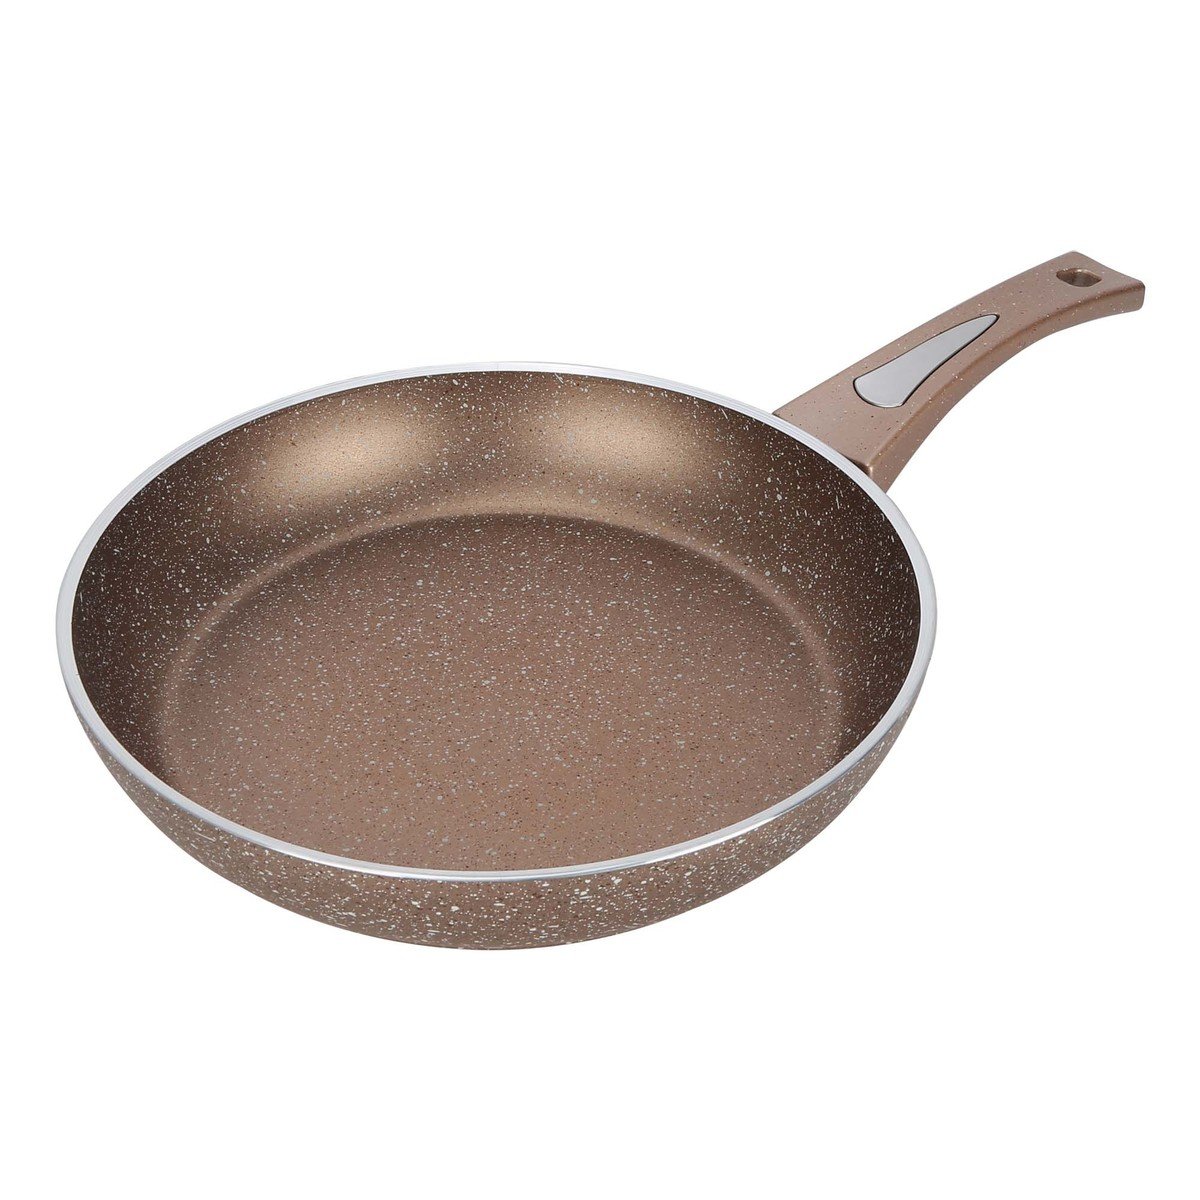 Chefline Granite Fry Pan, 26 cm, F26G